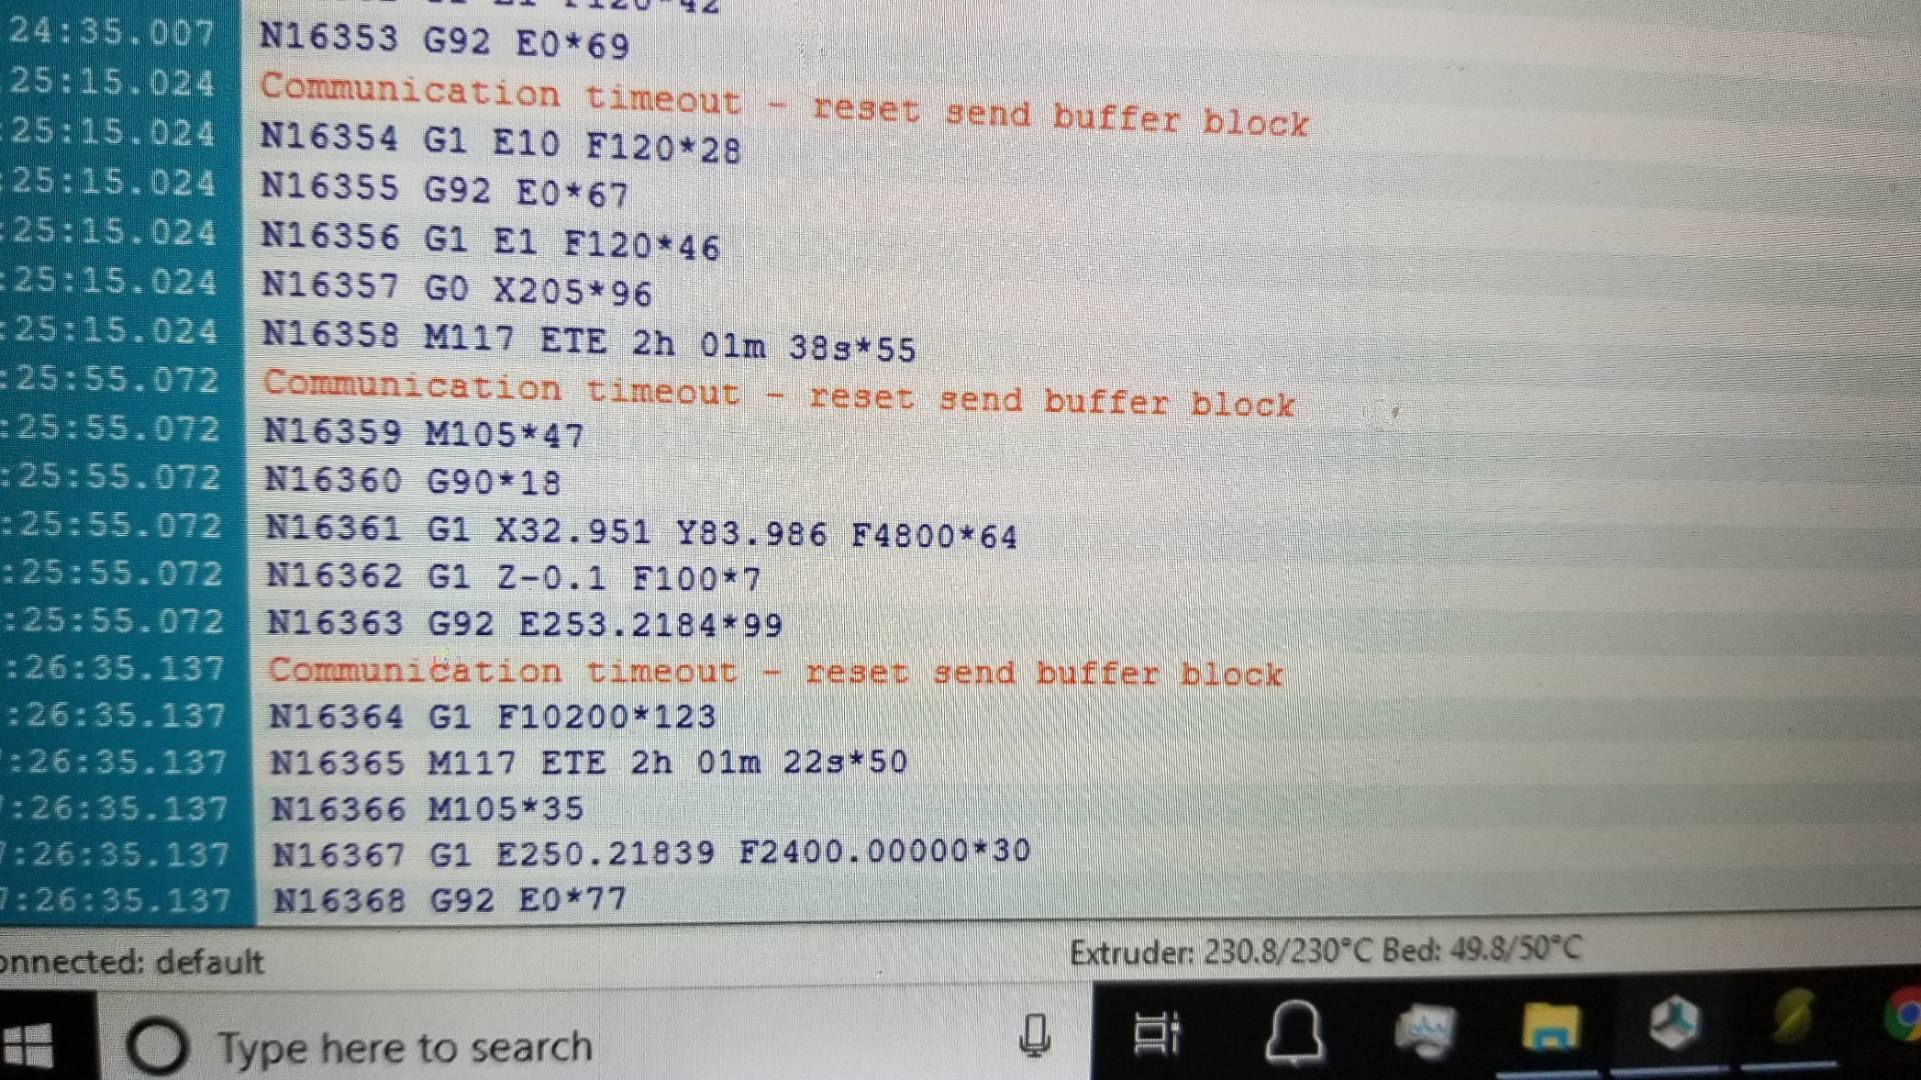 repetier communication timeout reset send buffer block - Repetier-Forum